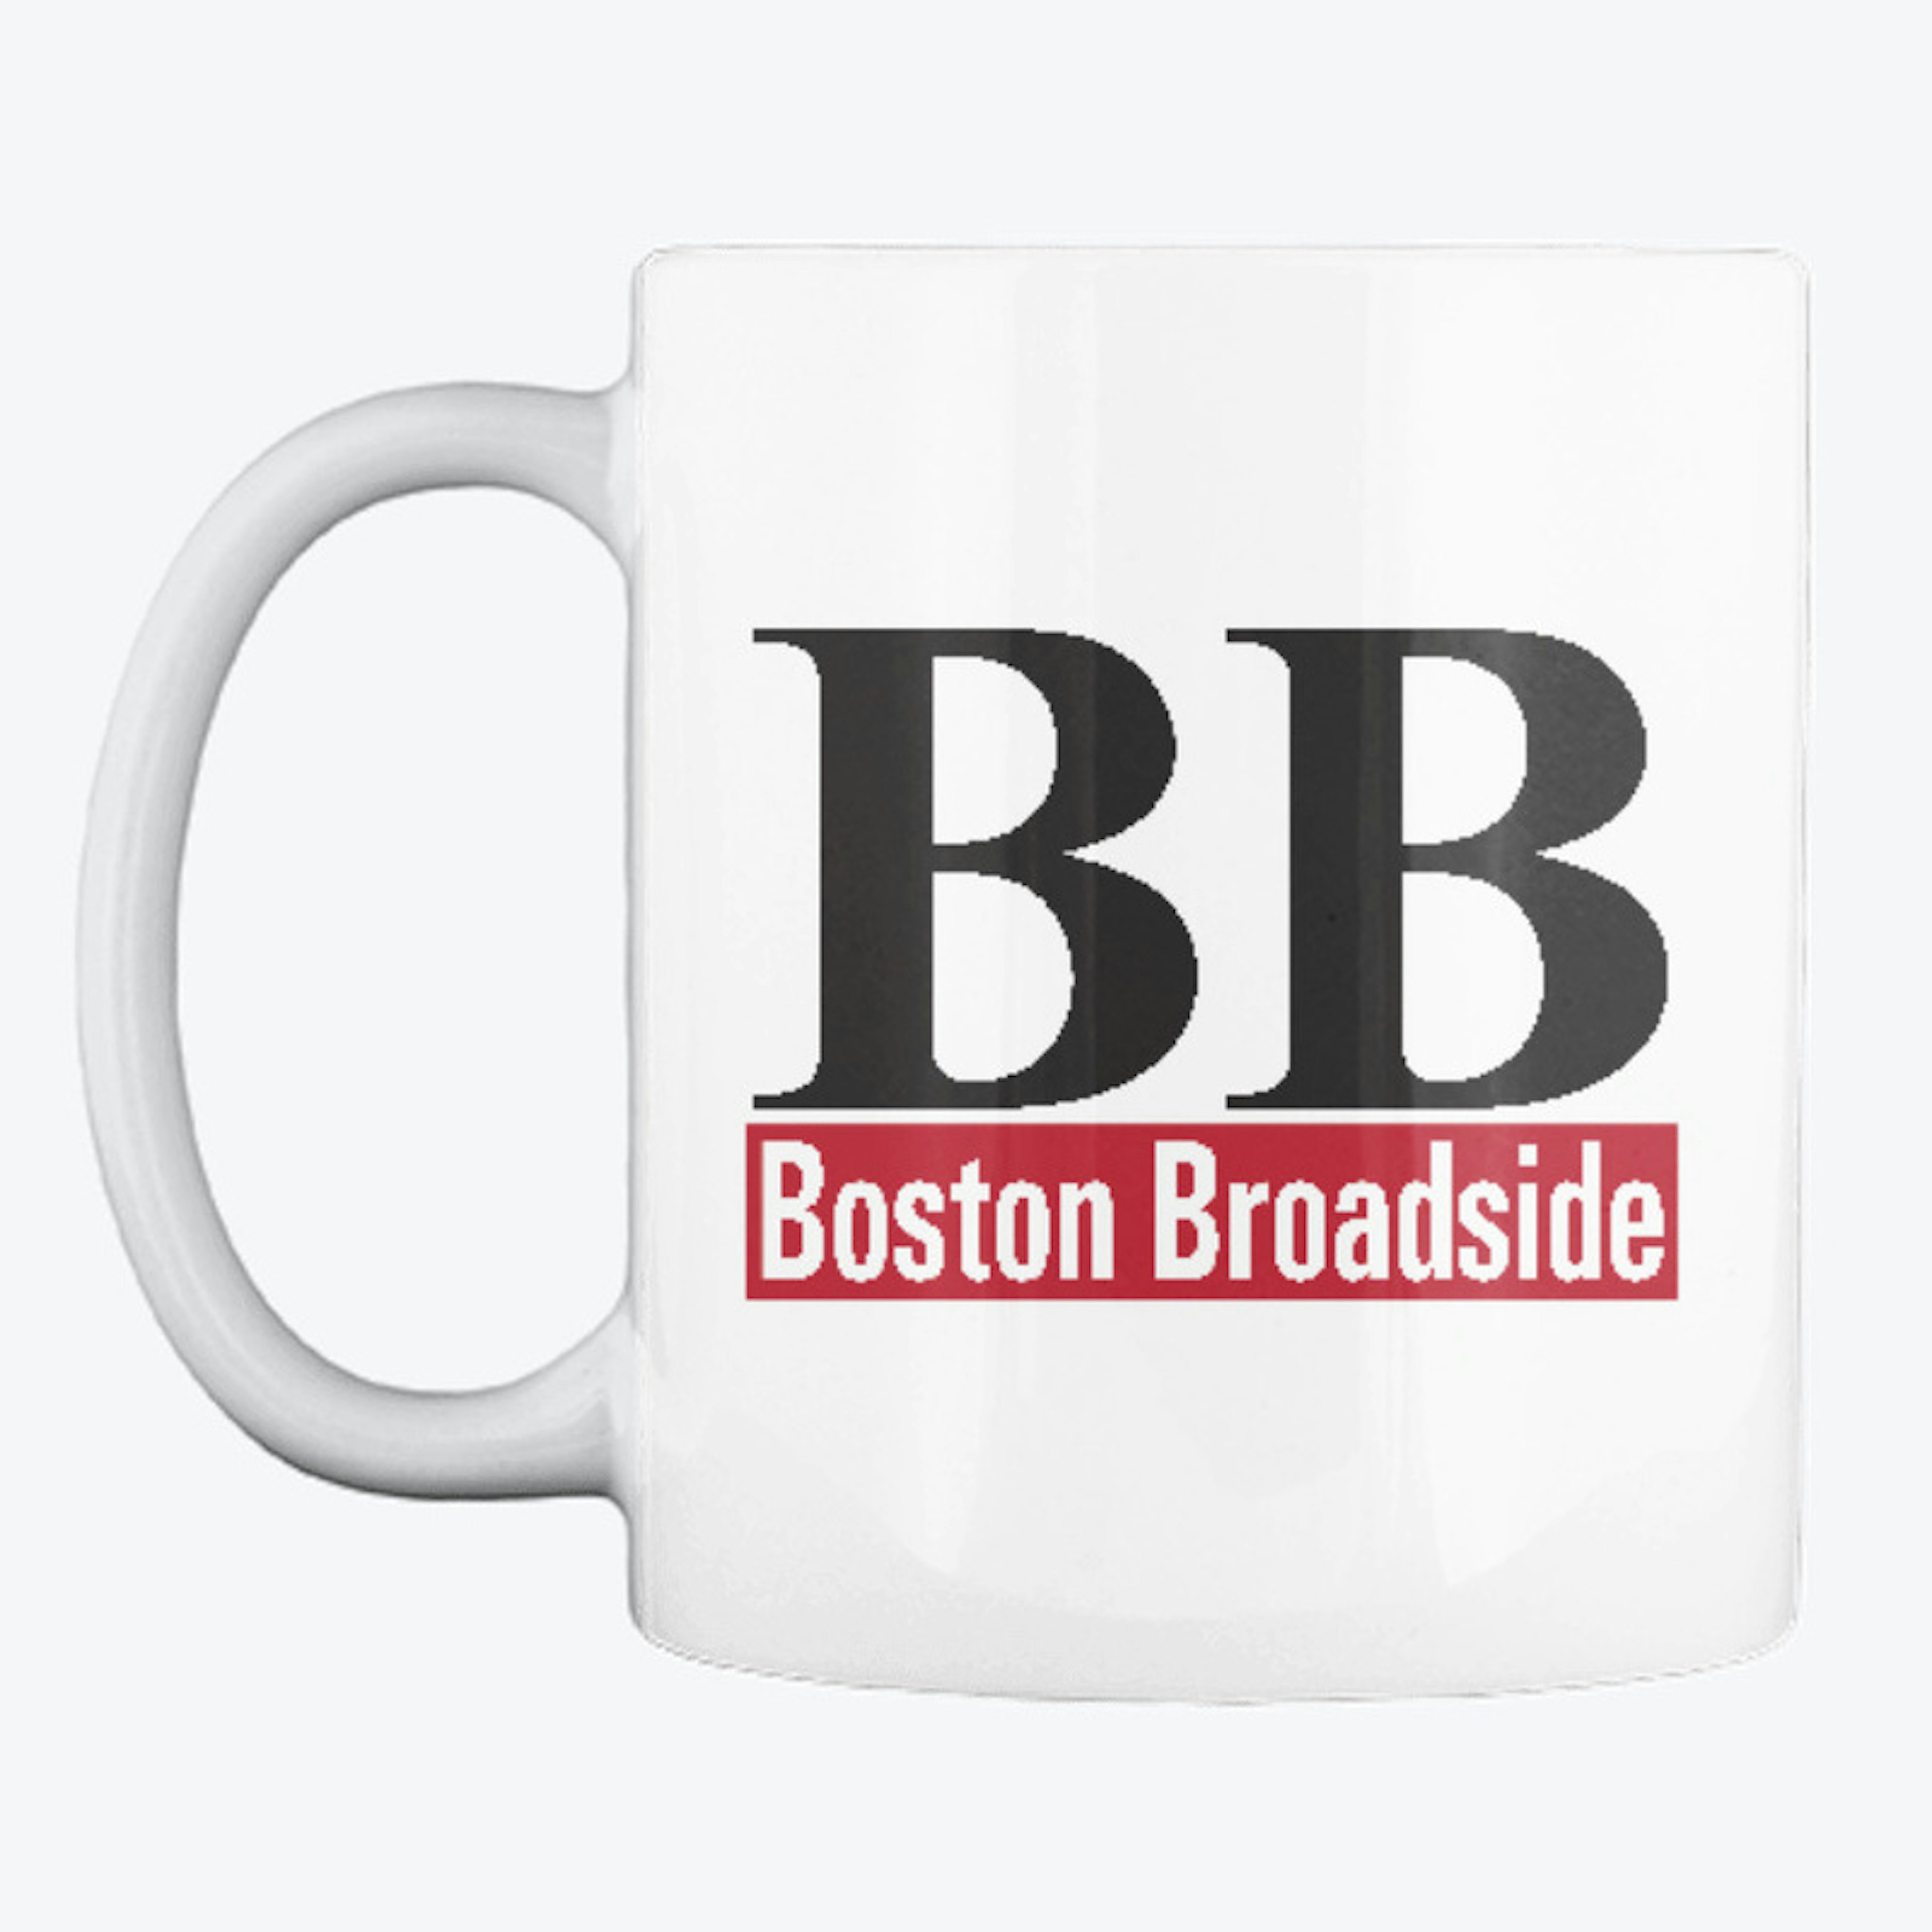 Boston Broadside MUG